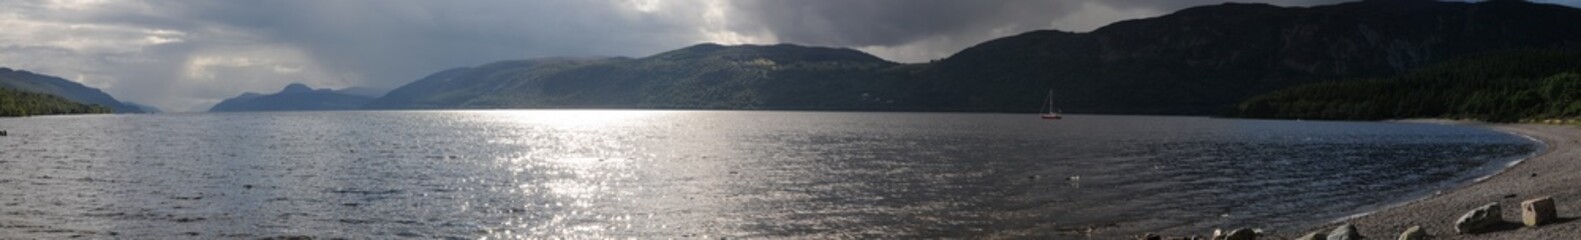 Loch Ness, Dores Beach, Highlands, Scotland